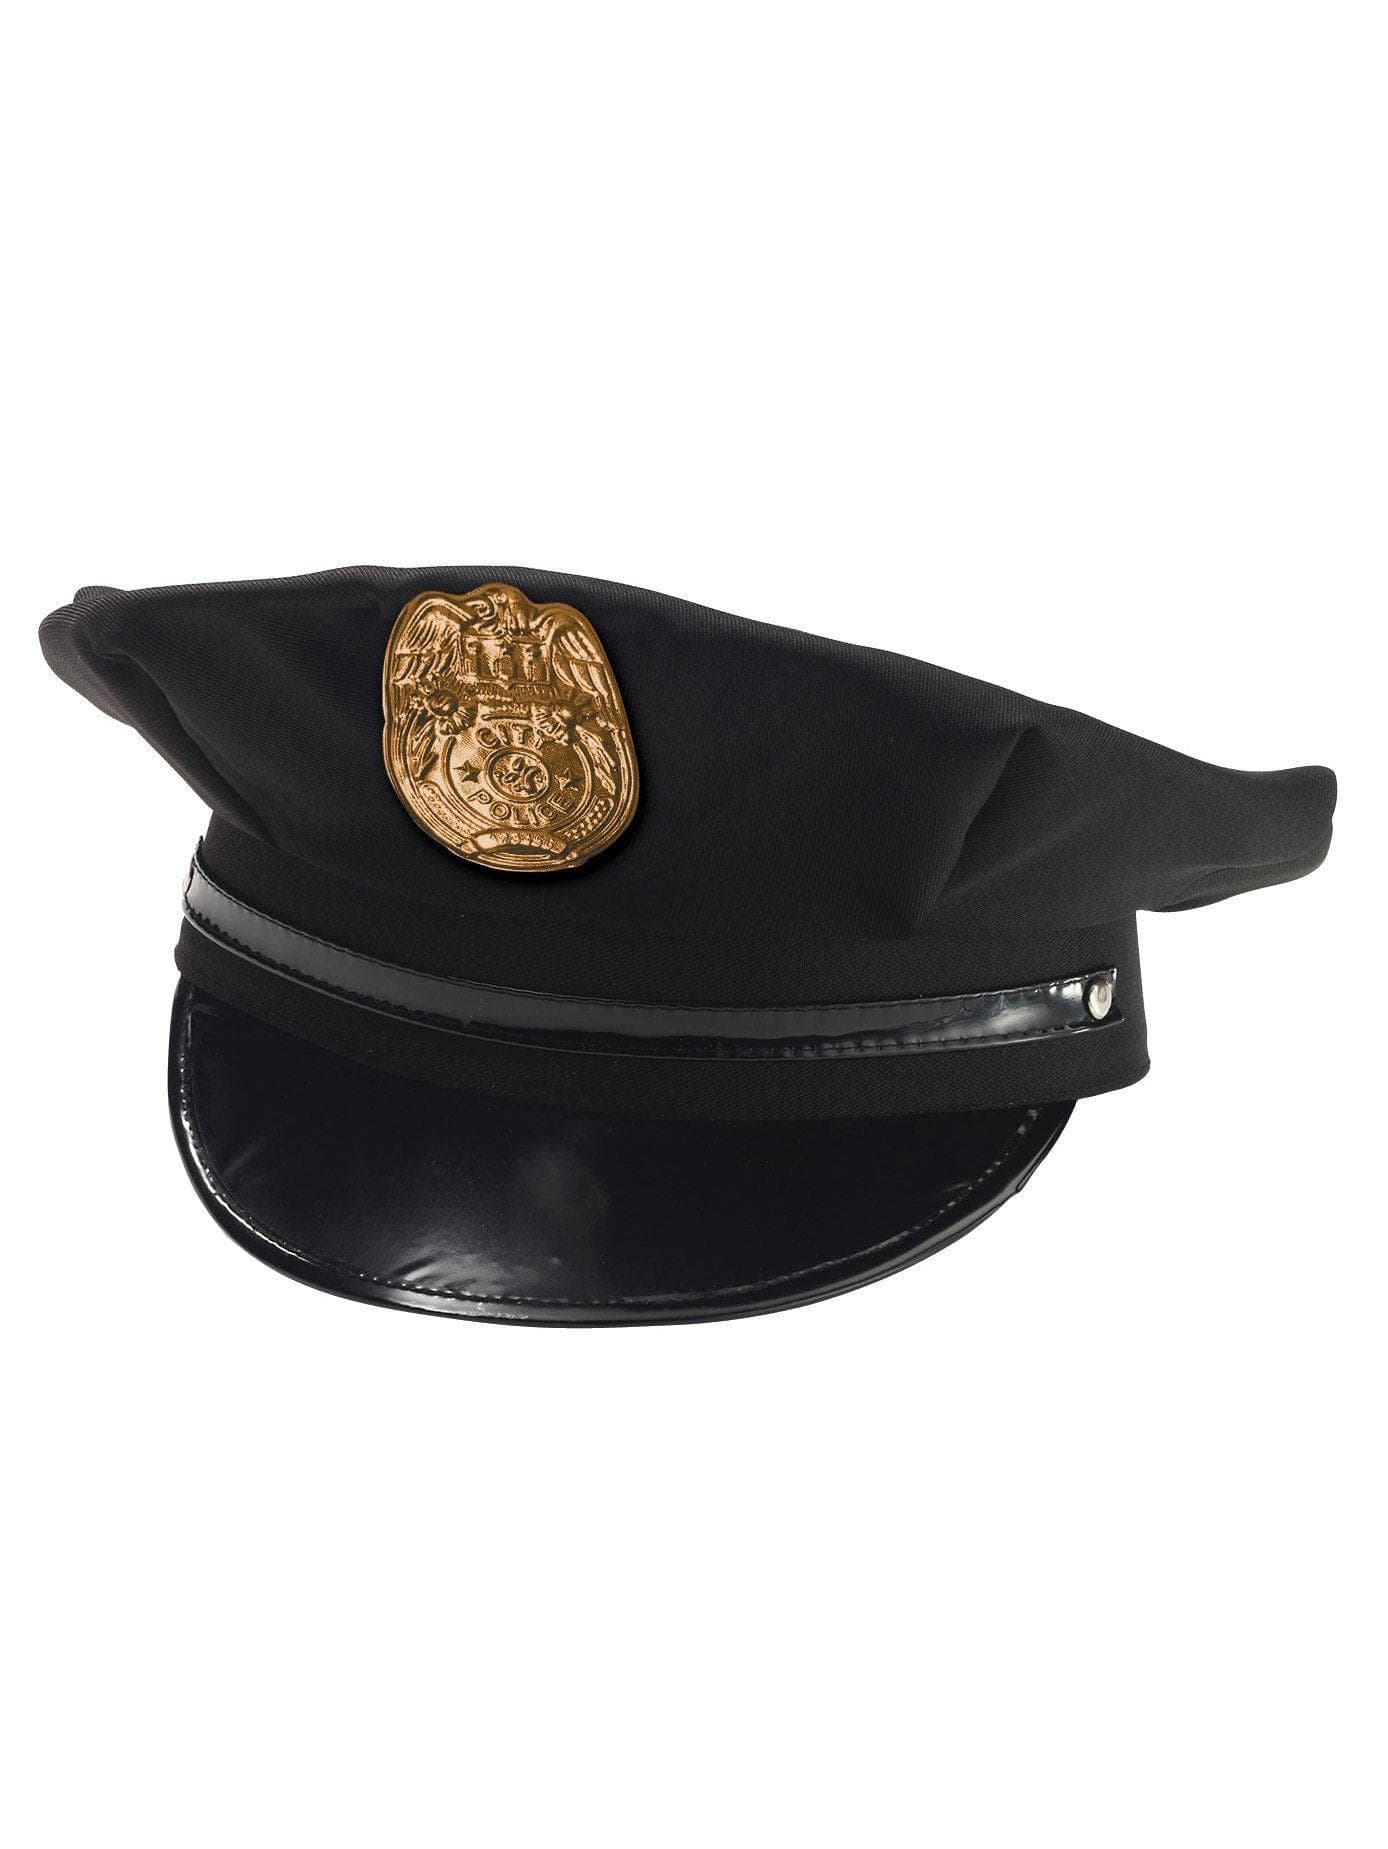 Kids' Black Police Chief Hat - costumes.com